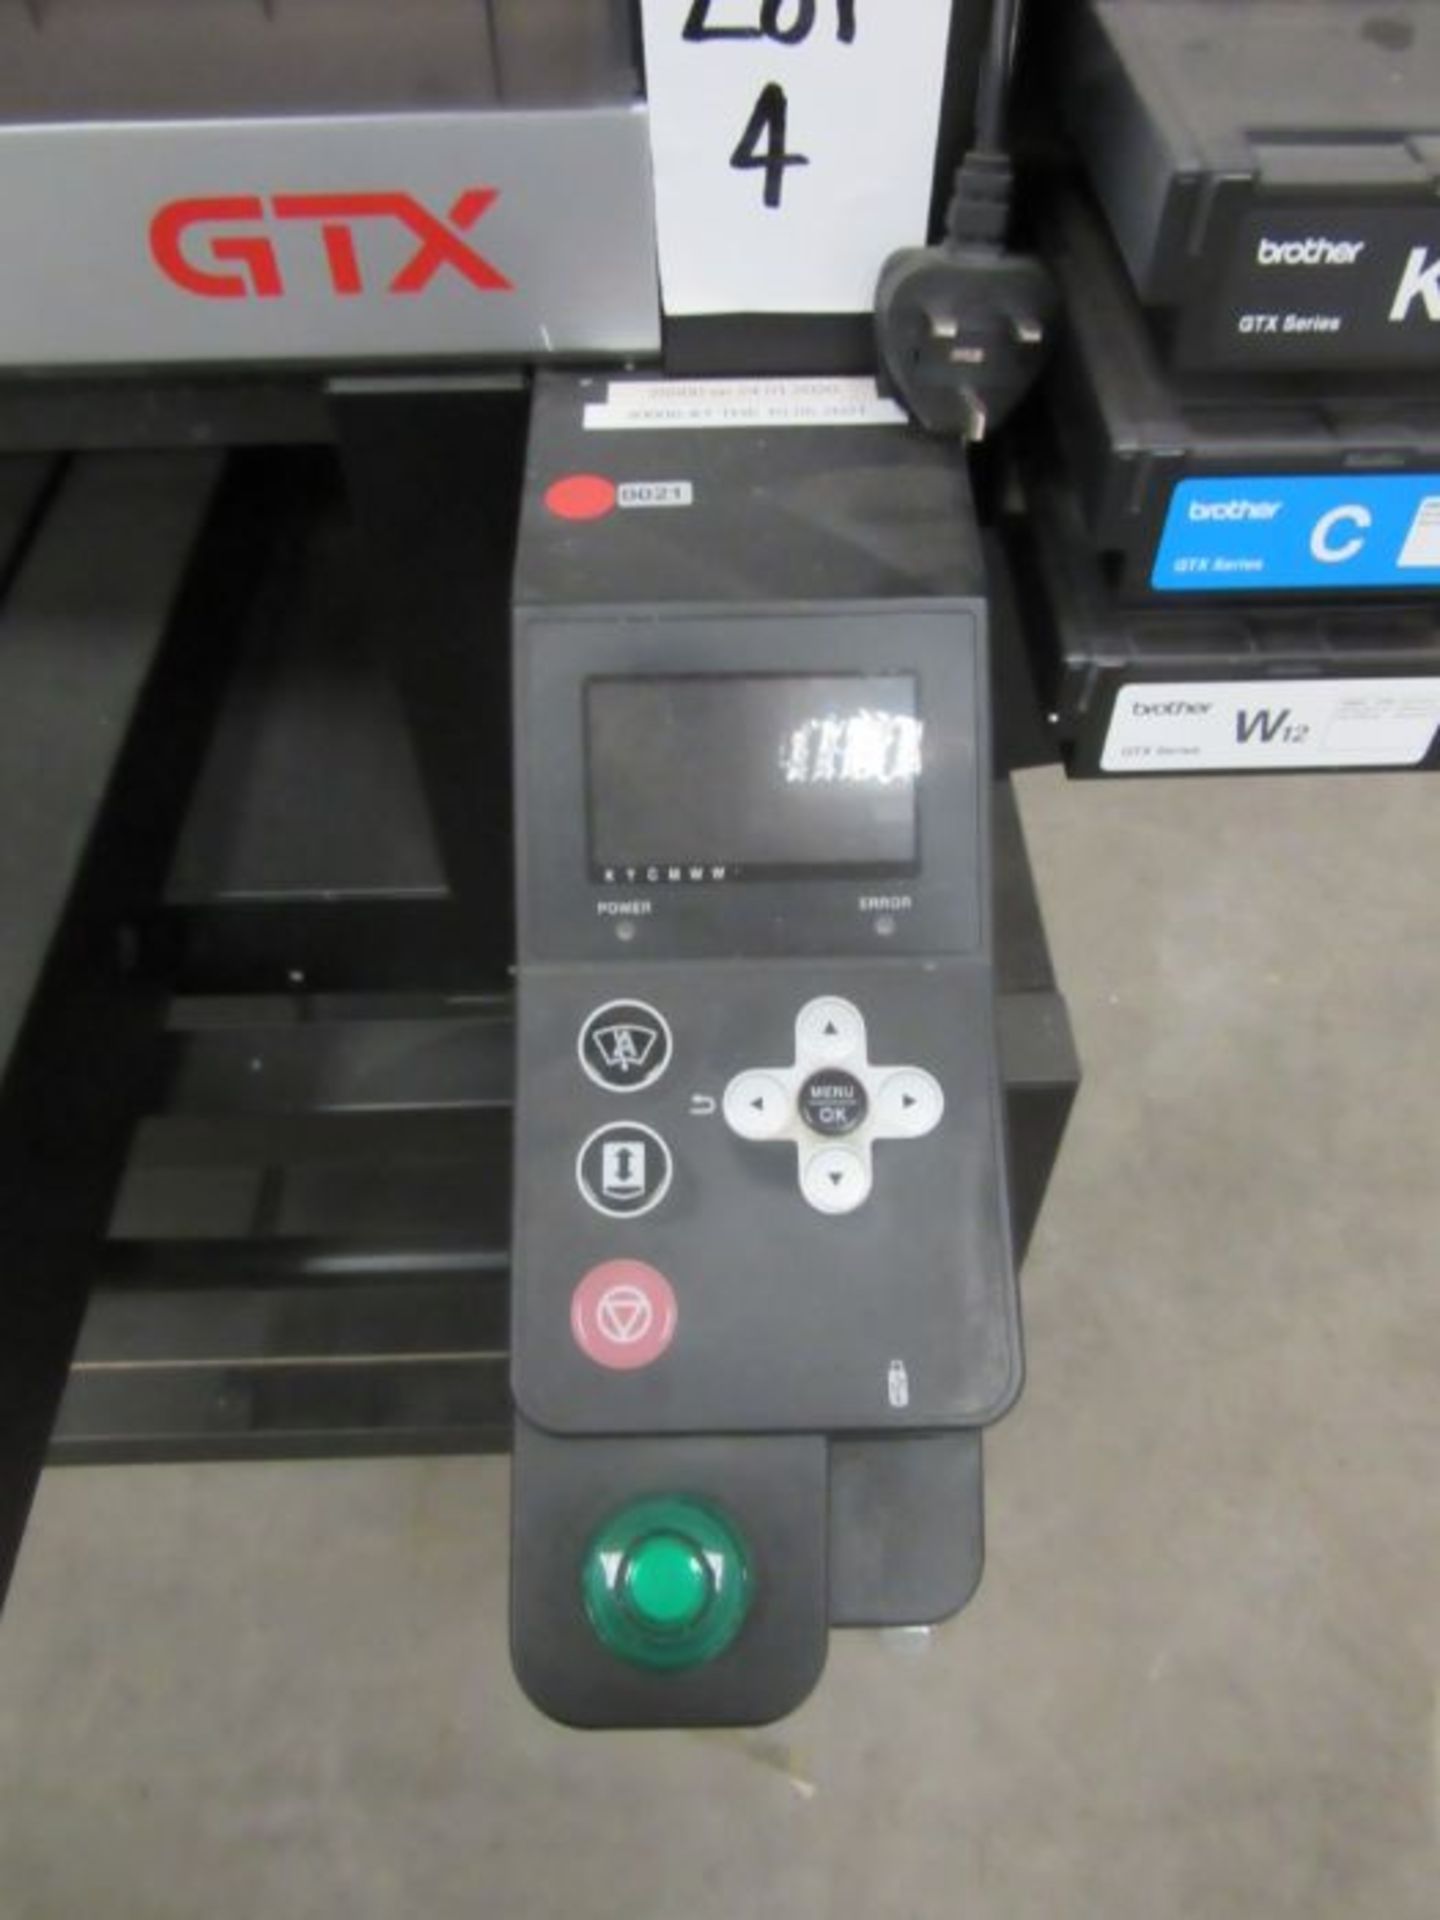 Brother DTG GTX-422 garment printer - Image 2 of 5